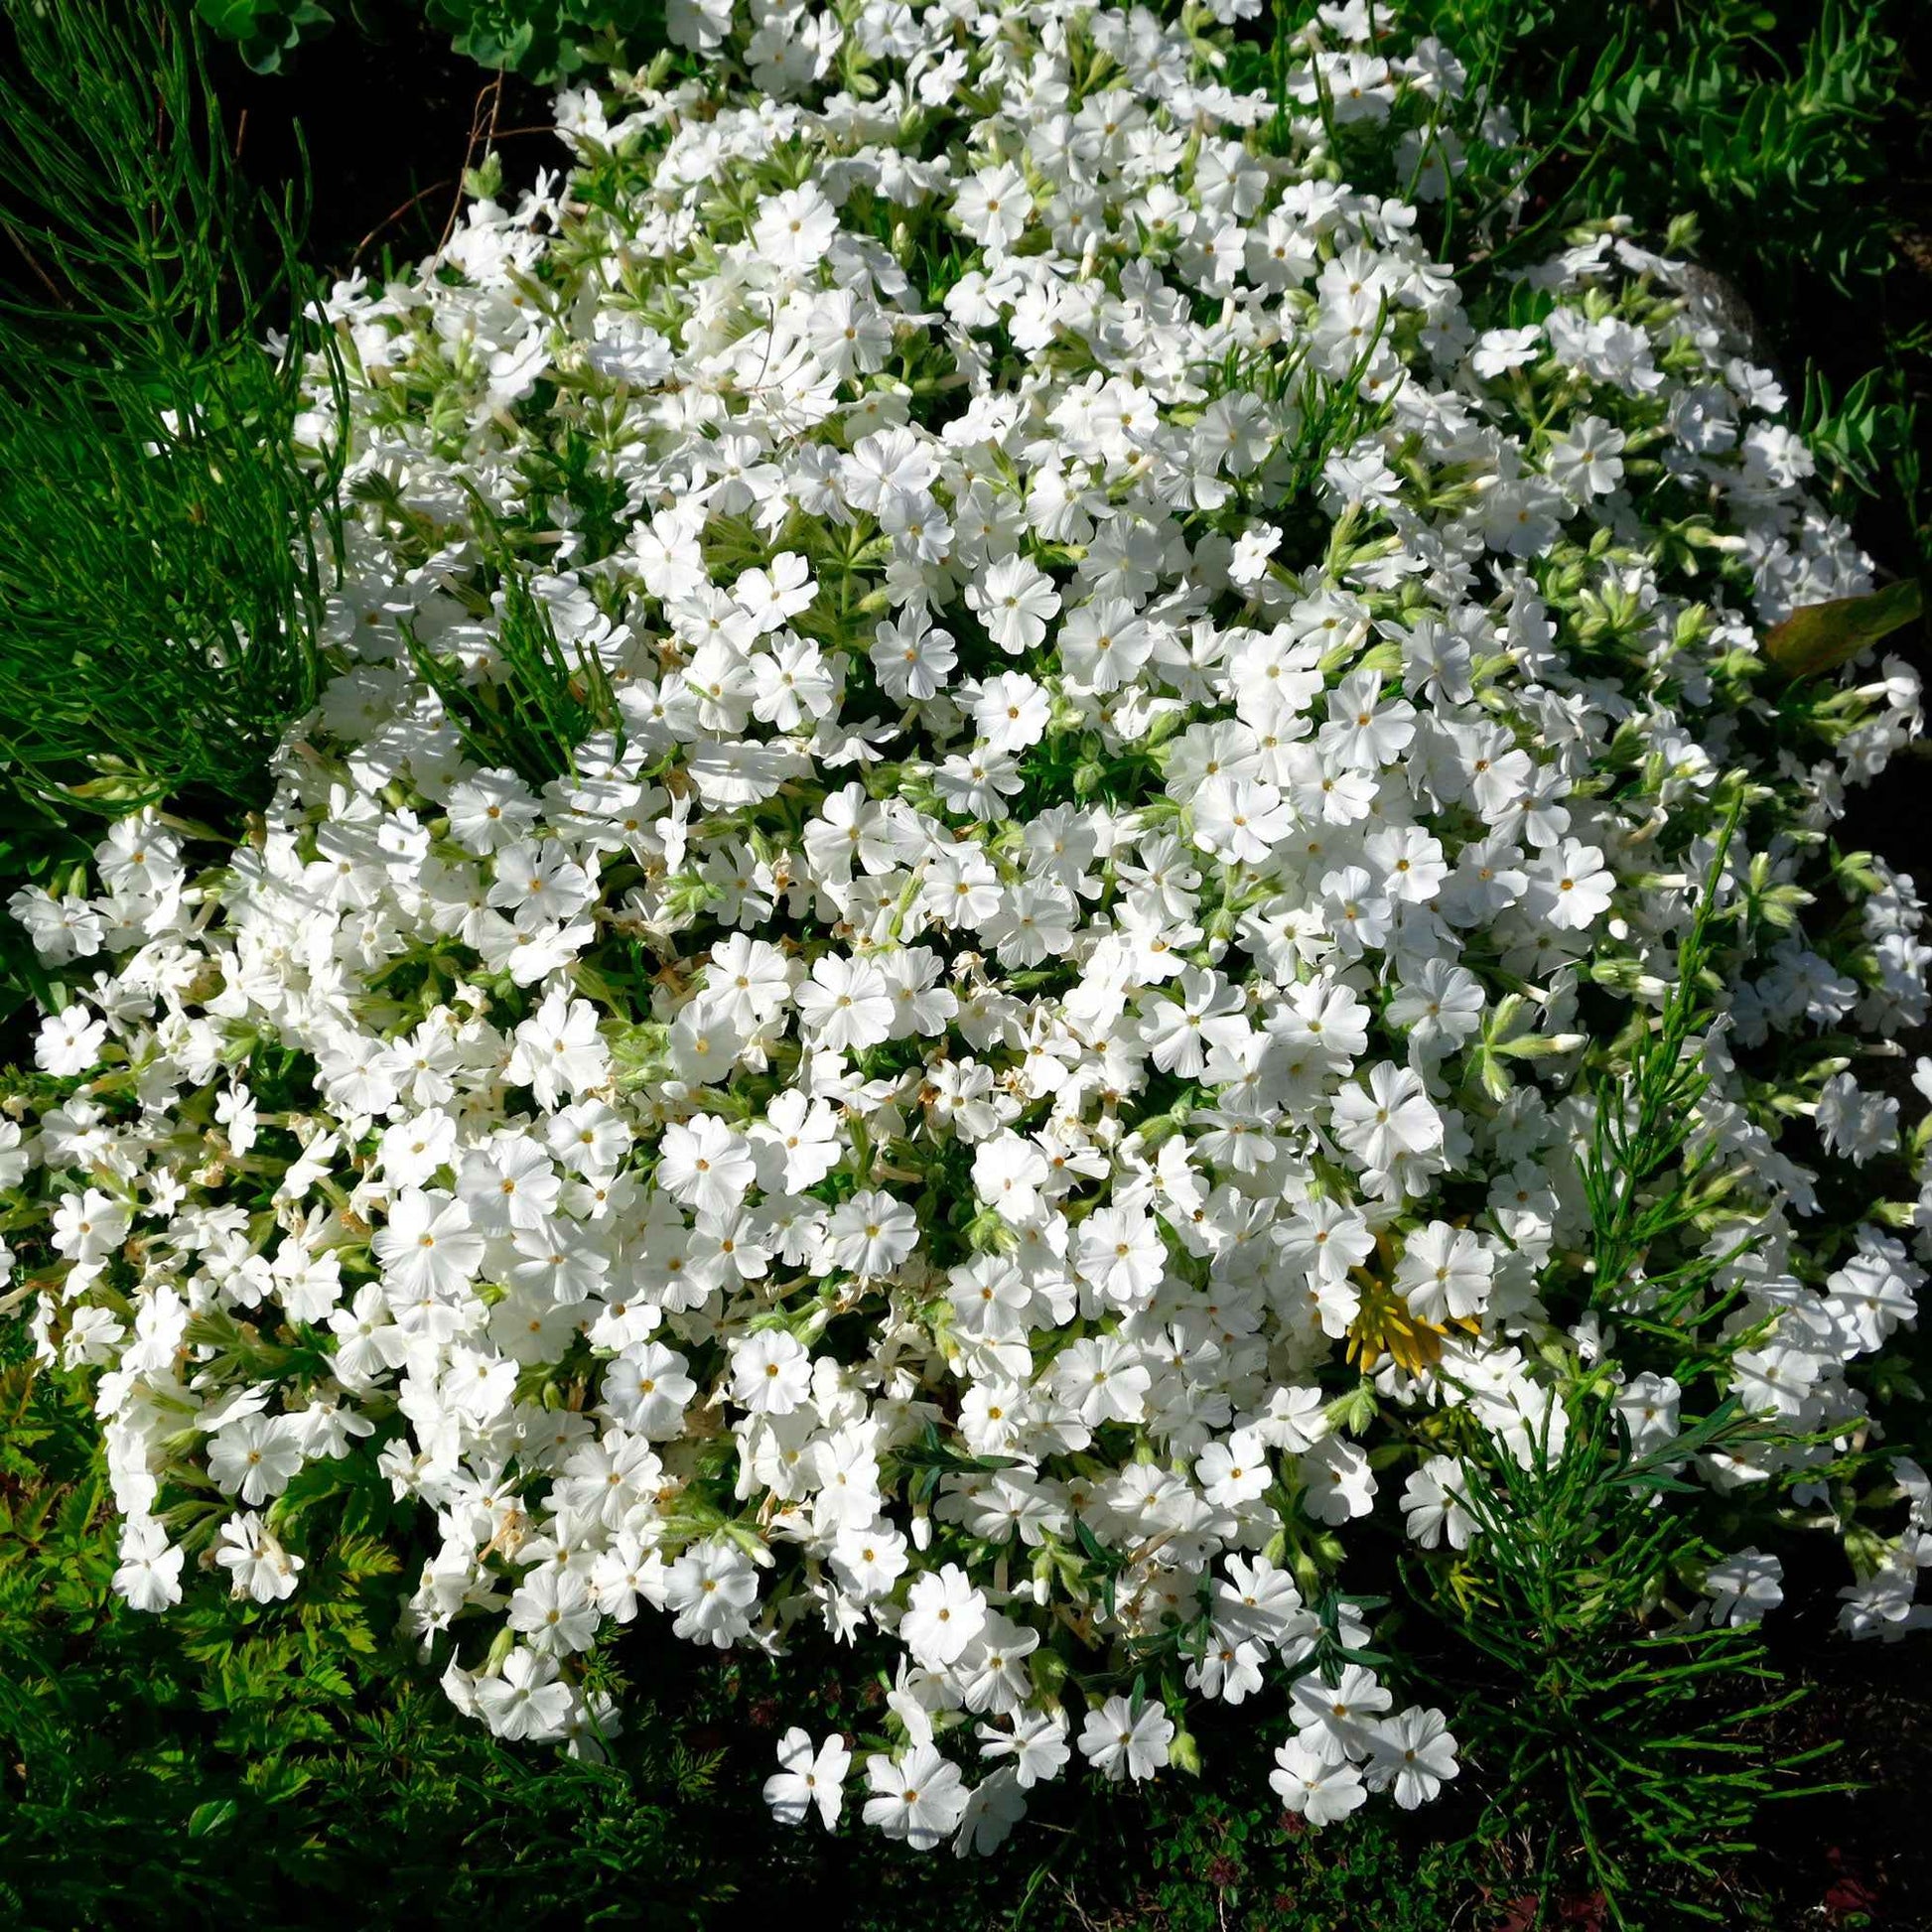 6-pack - bodembedekkers - kruipphlox subulata wit  - Winterhard - Groenblijvende tuinplanten